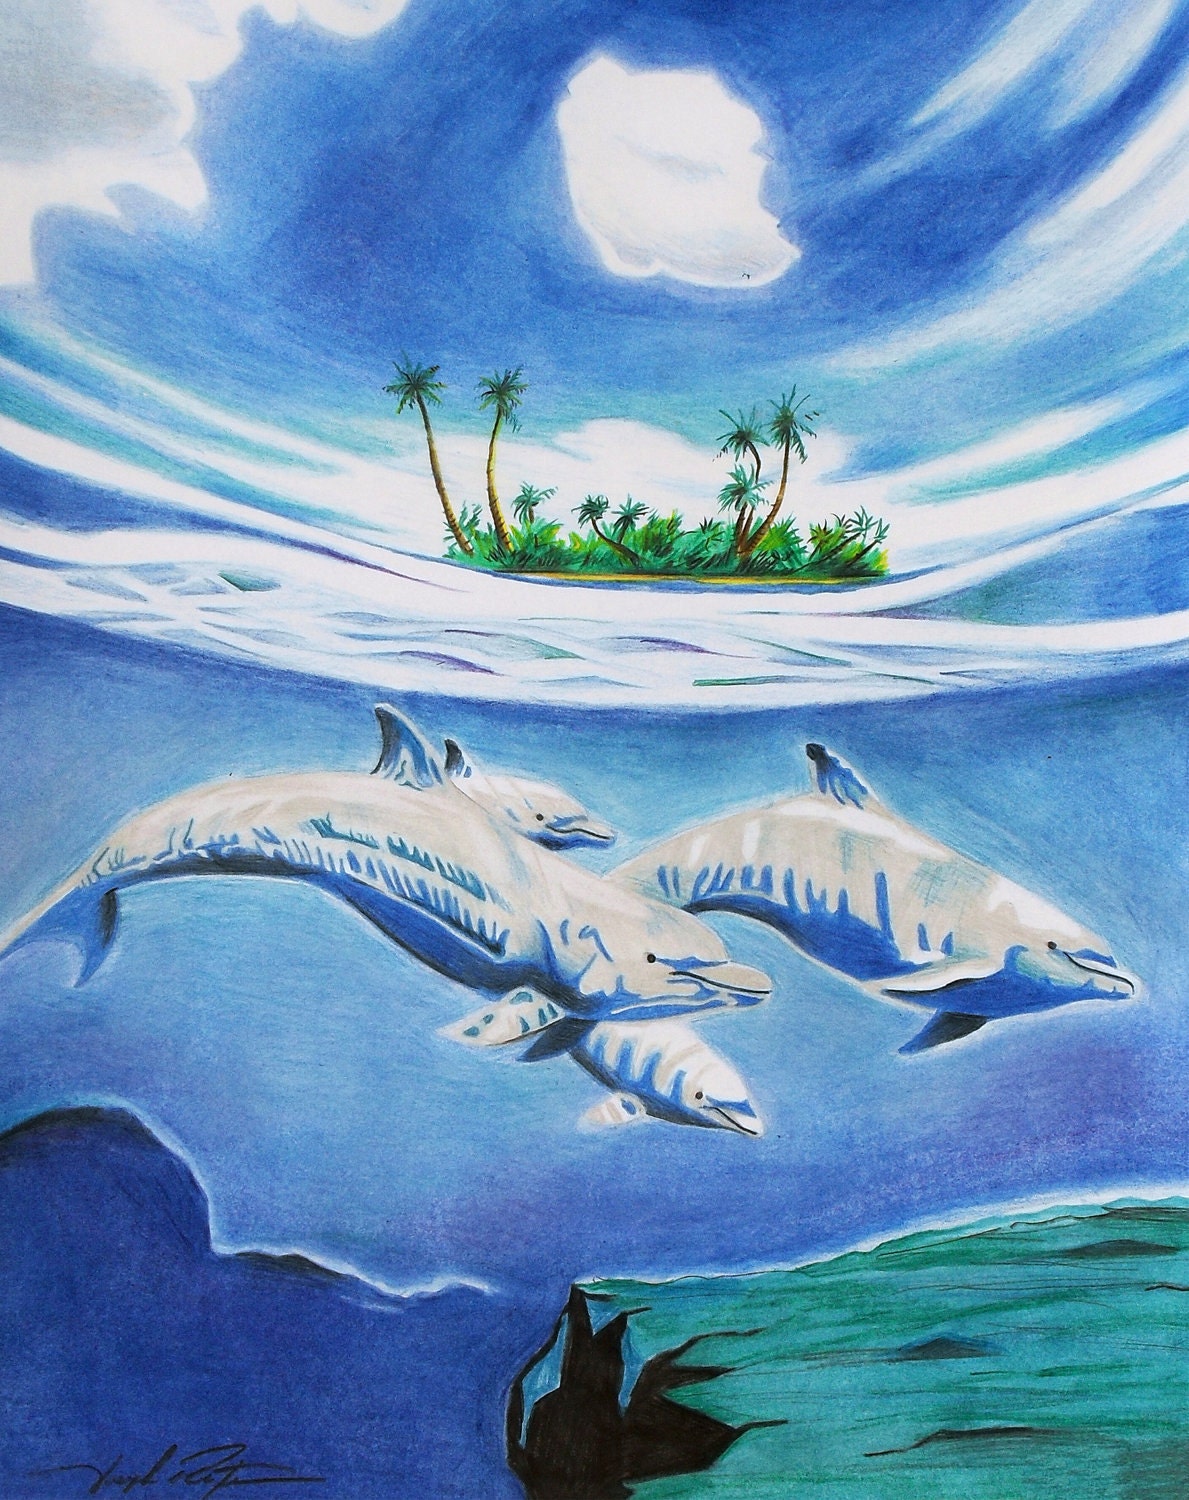 Dolphin Original Underwater Colored Pencil Drawing Reproduction 11x14 Illustration Poster Print - artsinwonderland